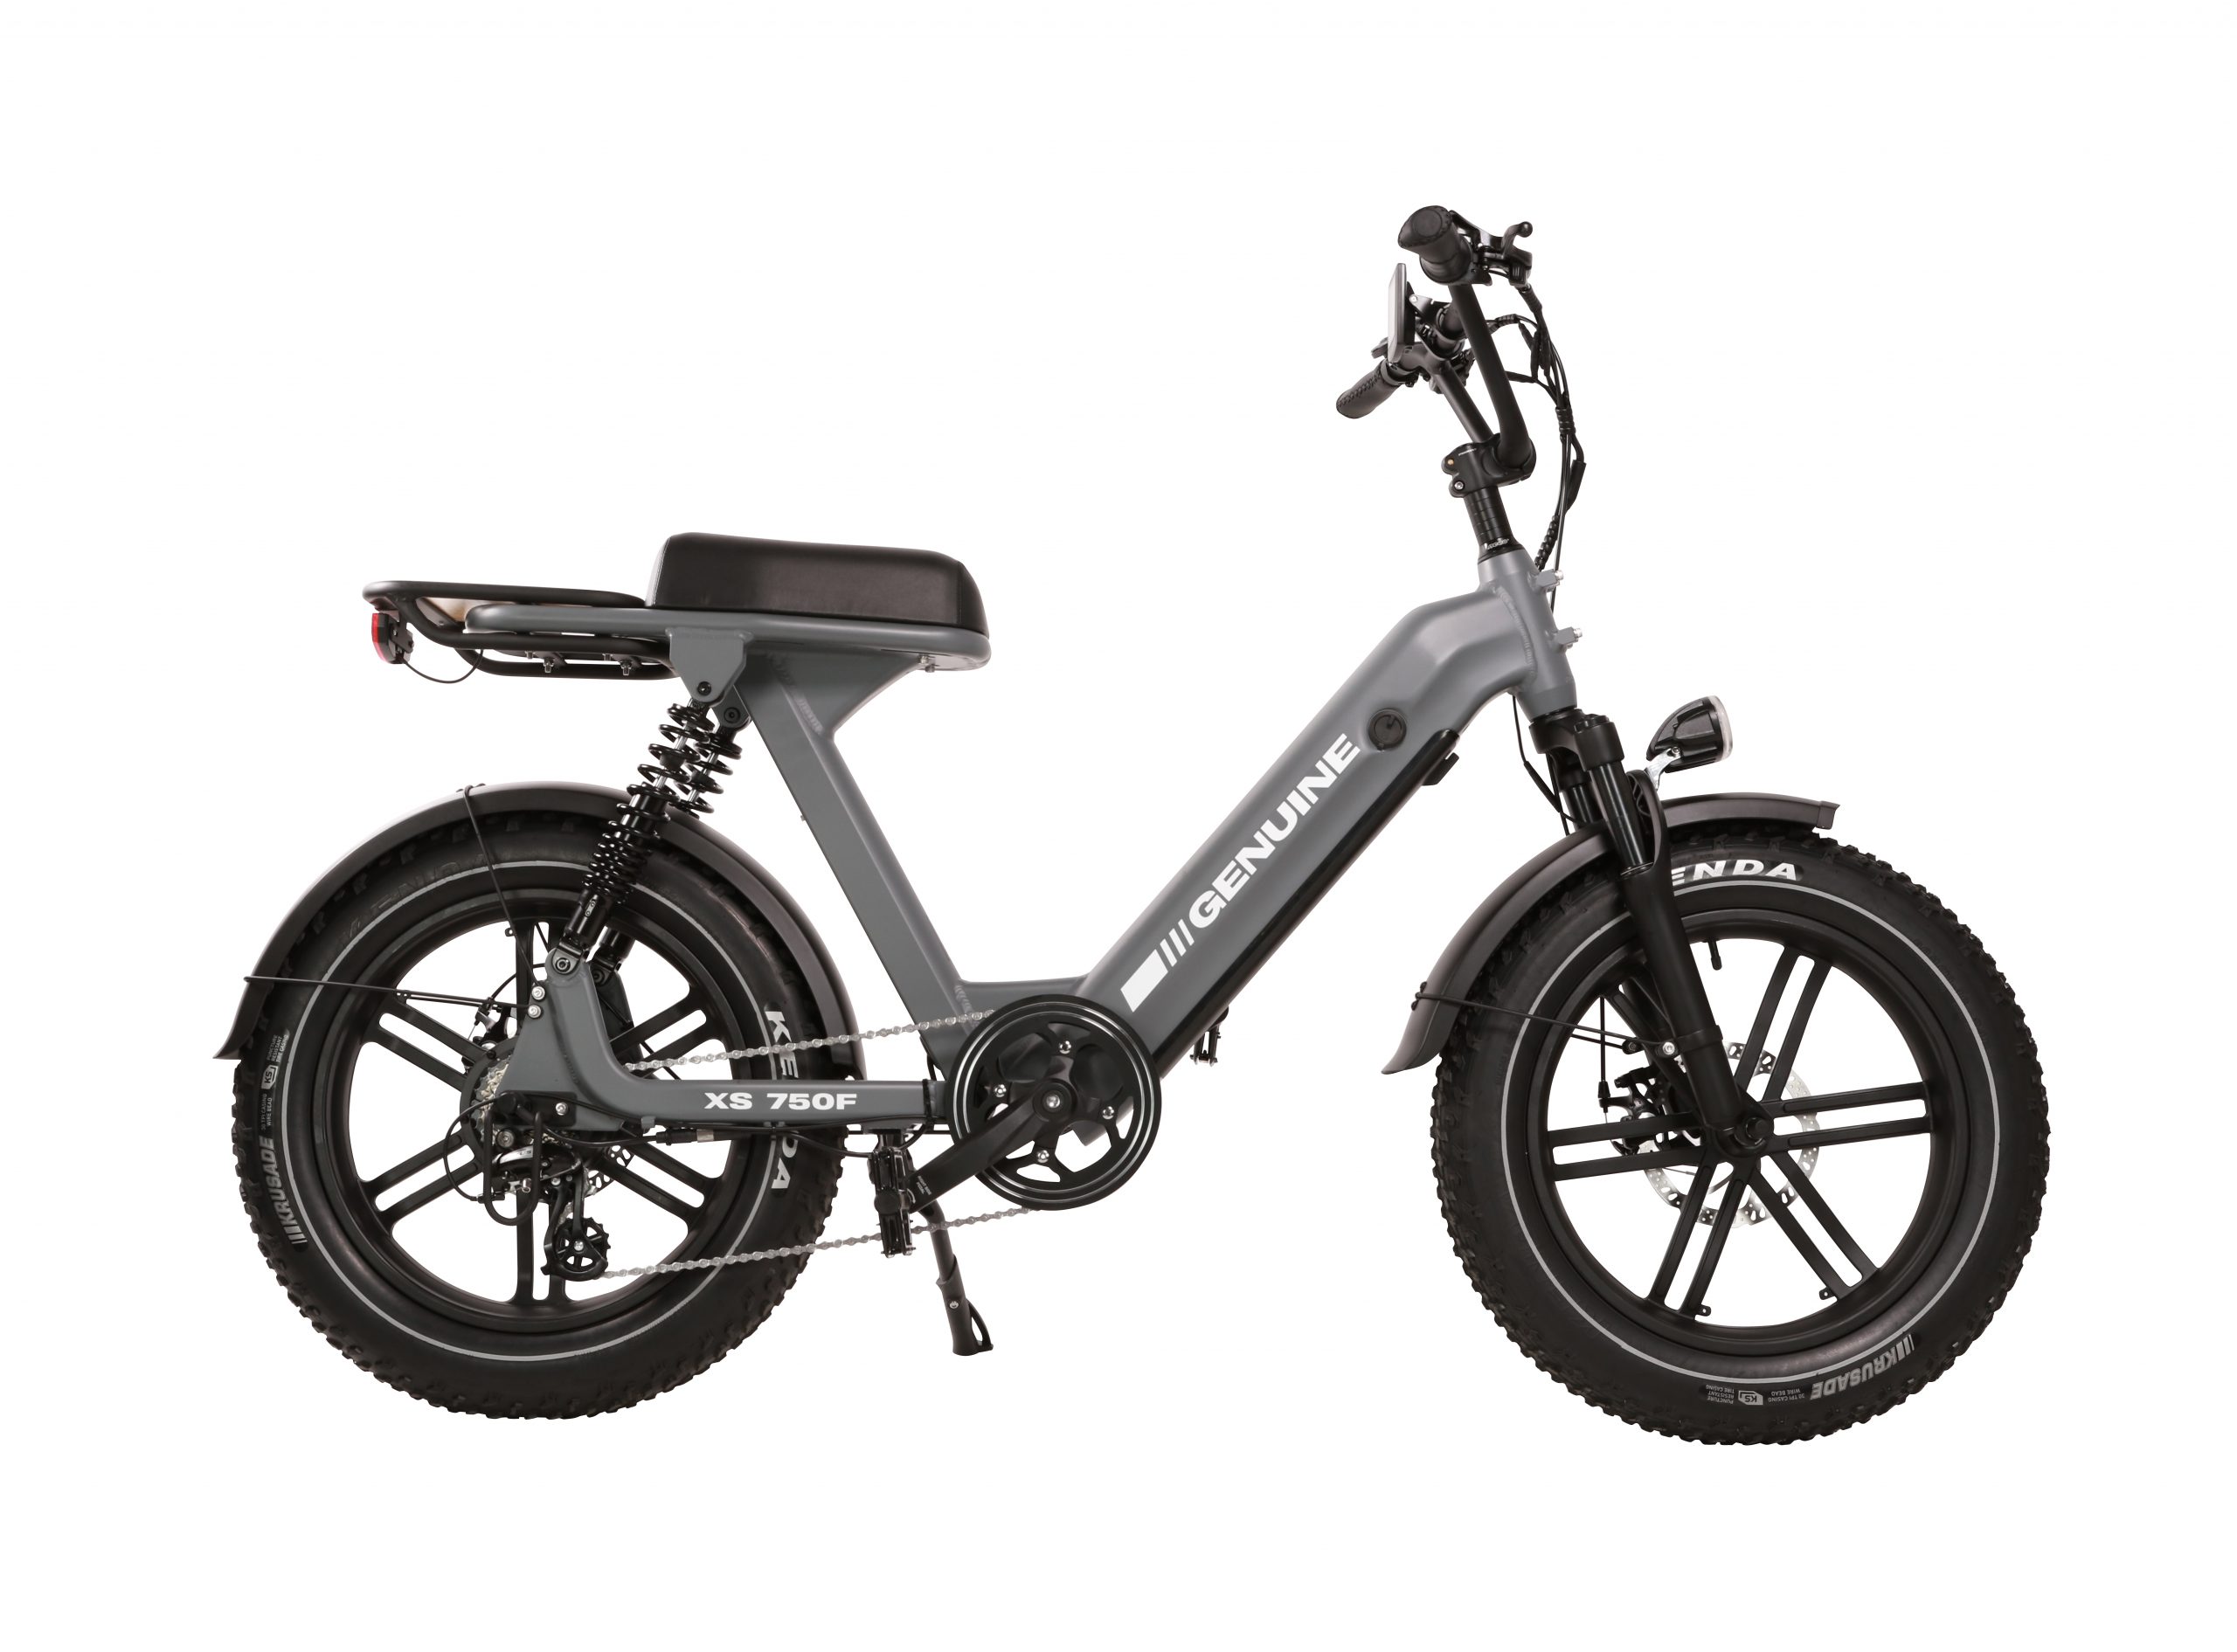 XS750F-electric bike